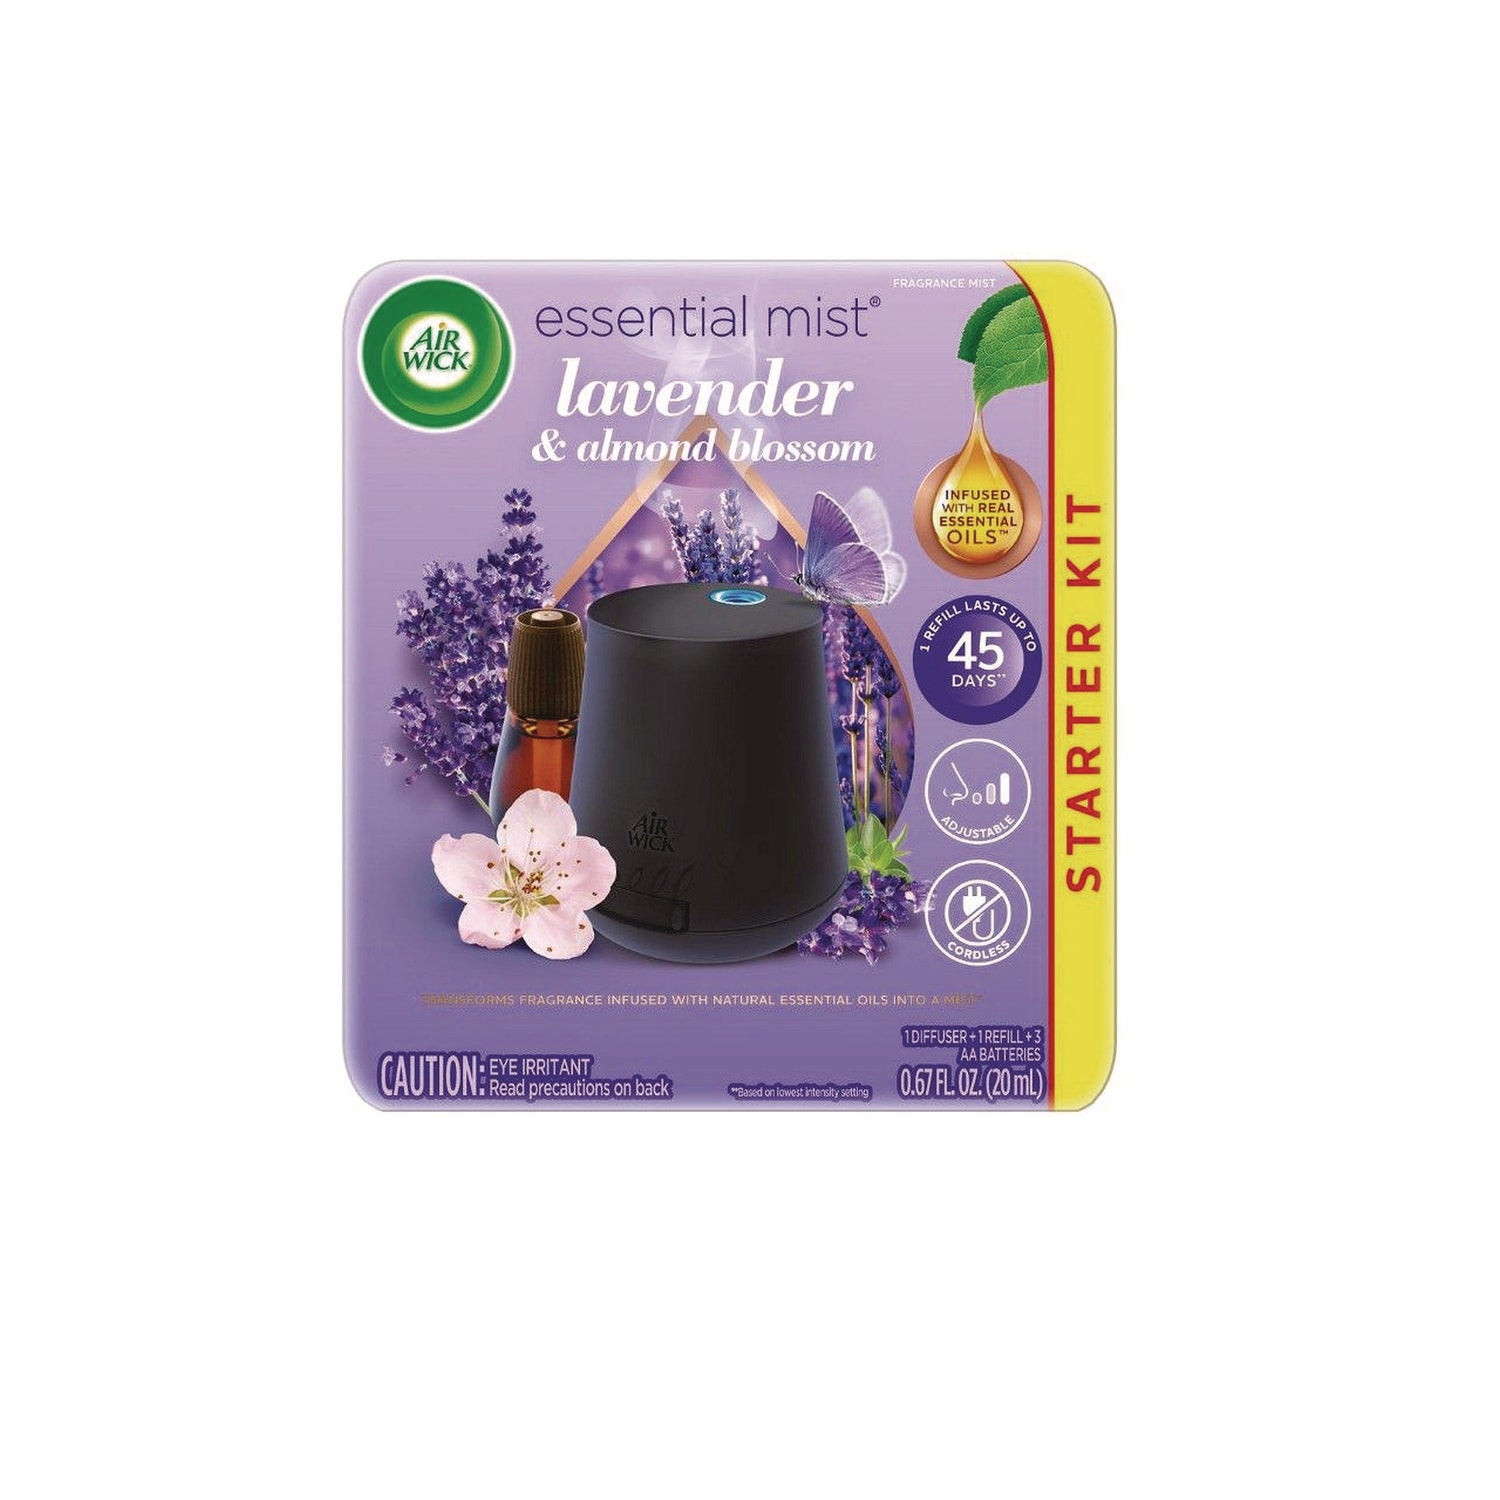 essential-mist-starter-kit-lavender-and-almond-blossom-067-oz-bottle-4-carton_rac98576 - 1